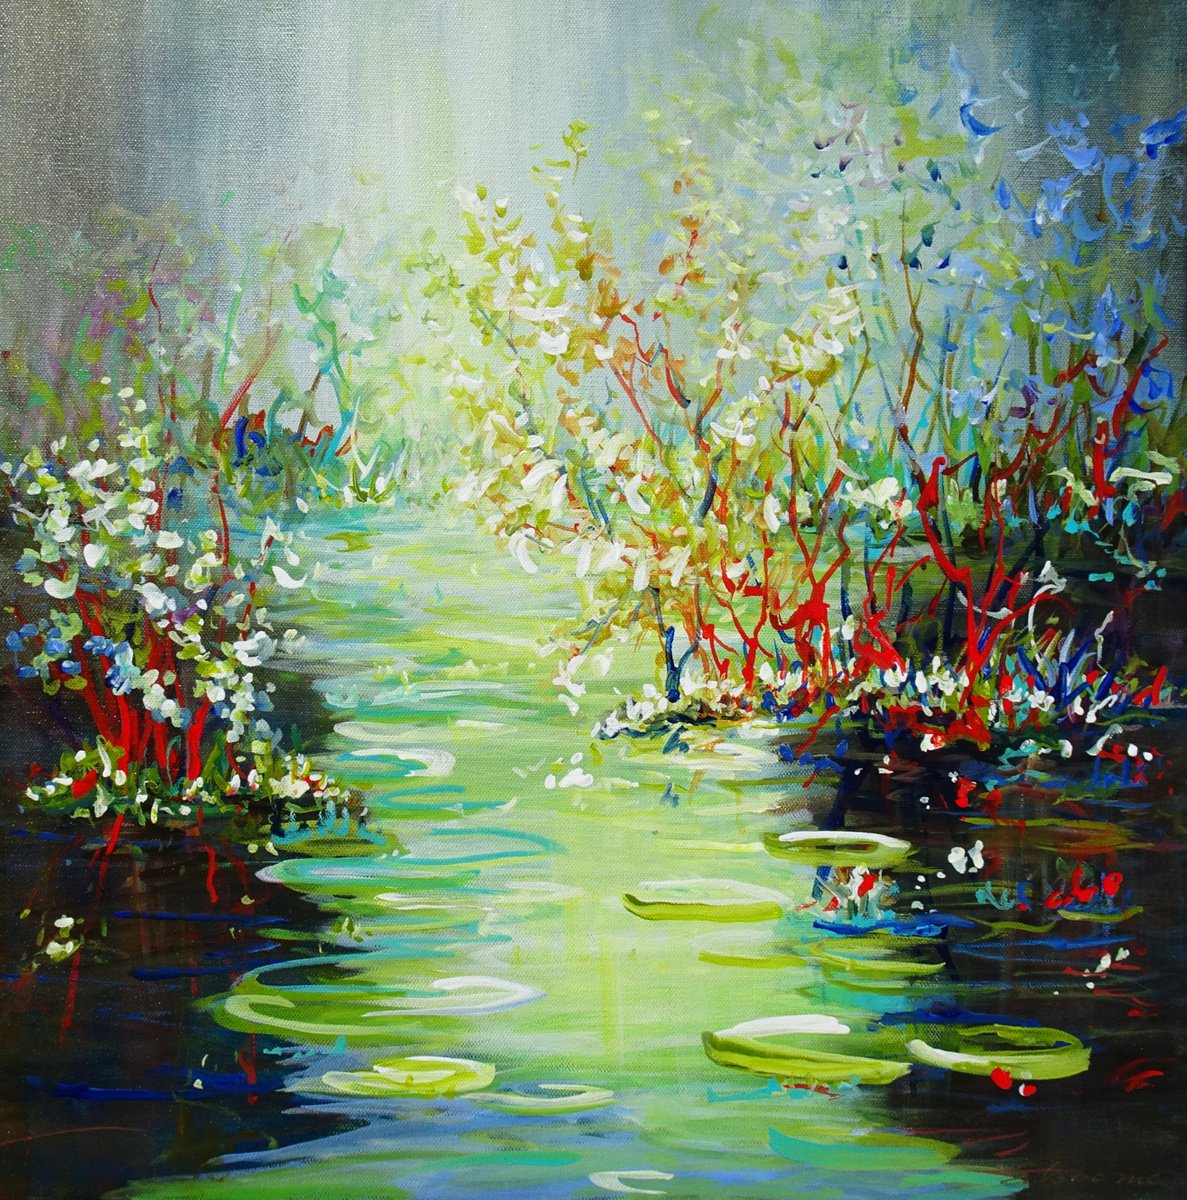 WATER REFLECTIONS I by Sveta Osborne